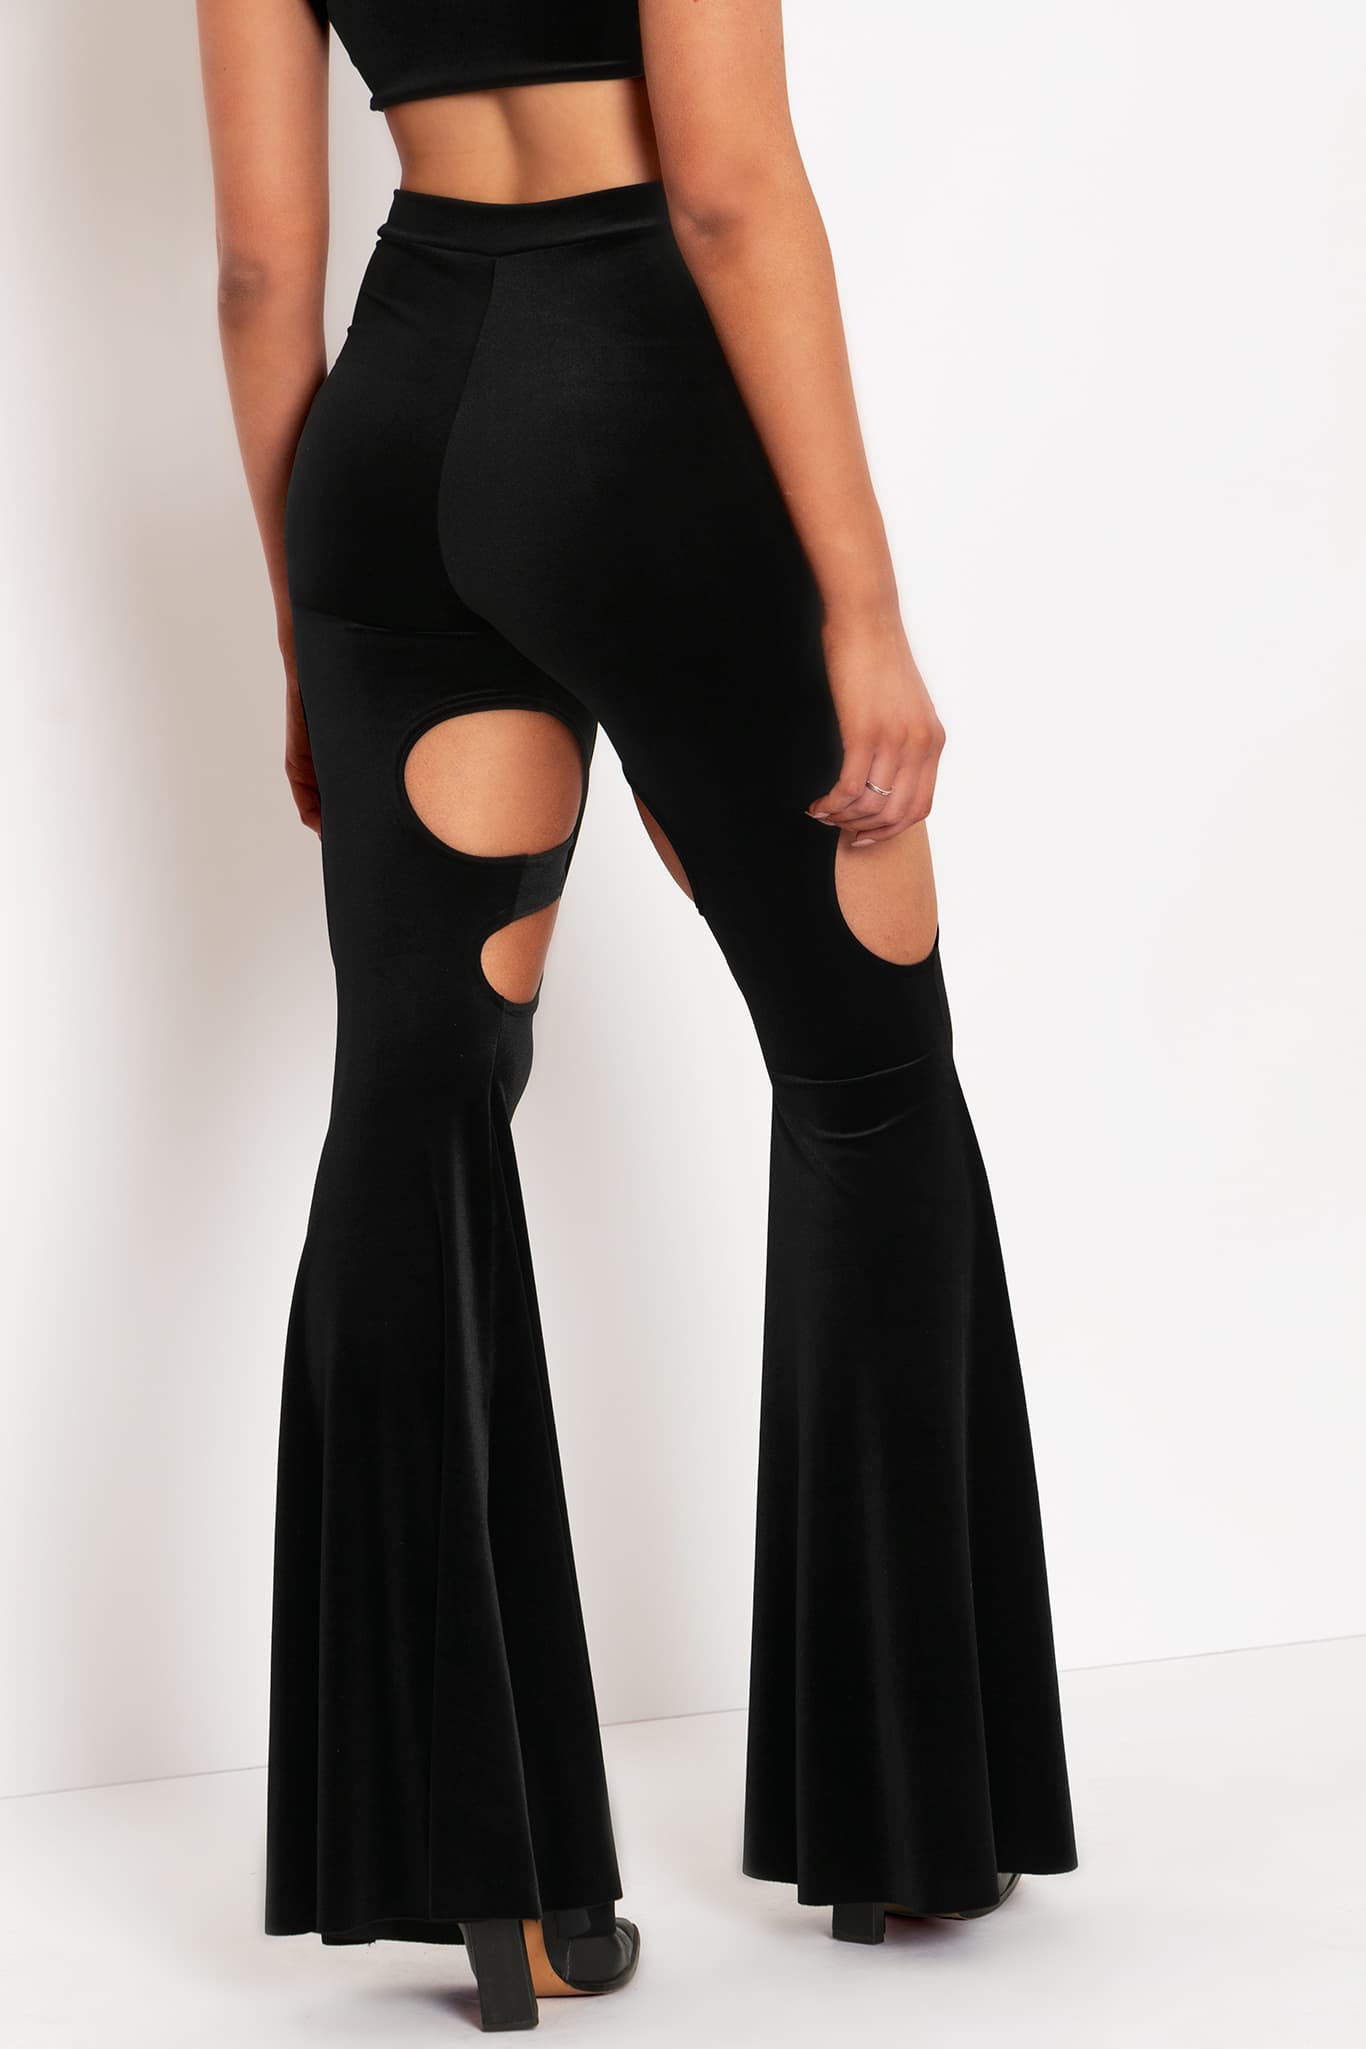 Fashion Nova Flared Pants | Mercari